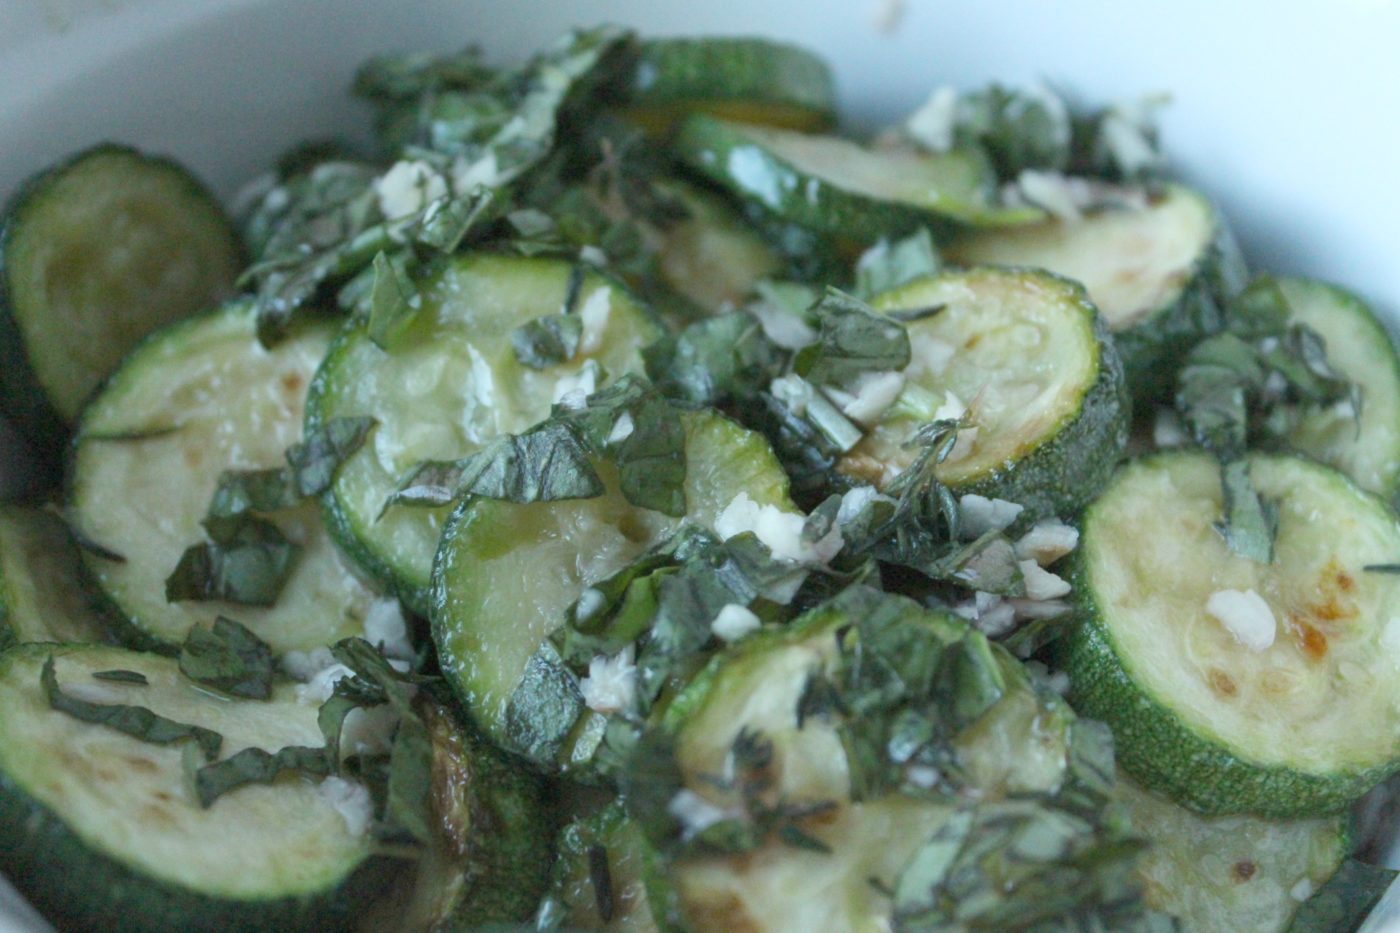 Garlic marinated zucchini - an easy side dish.